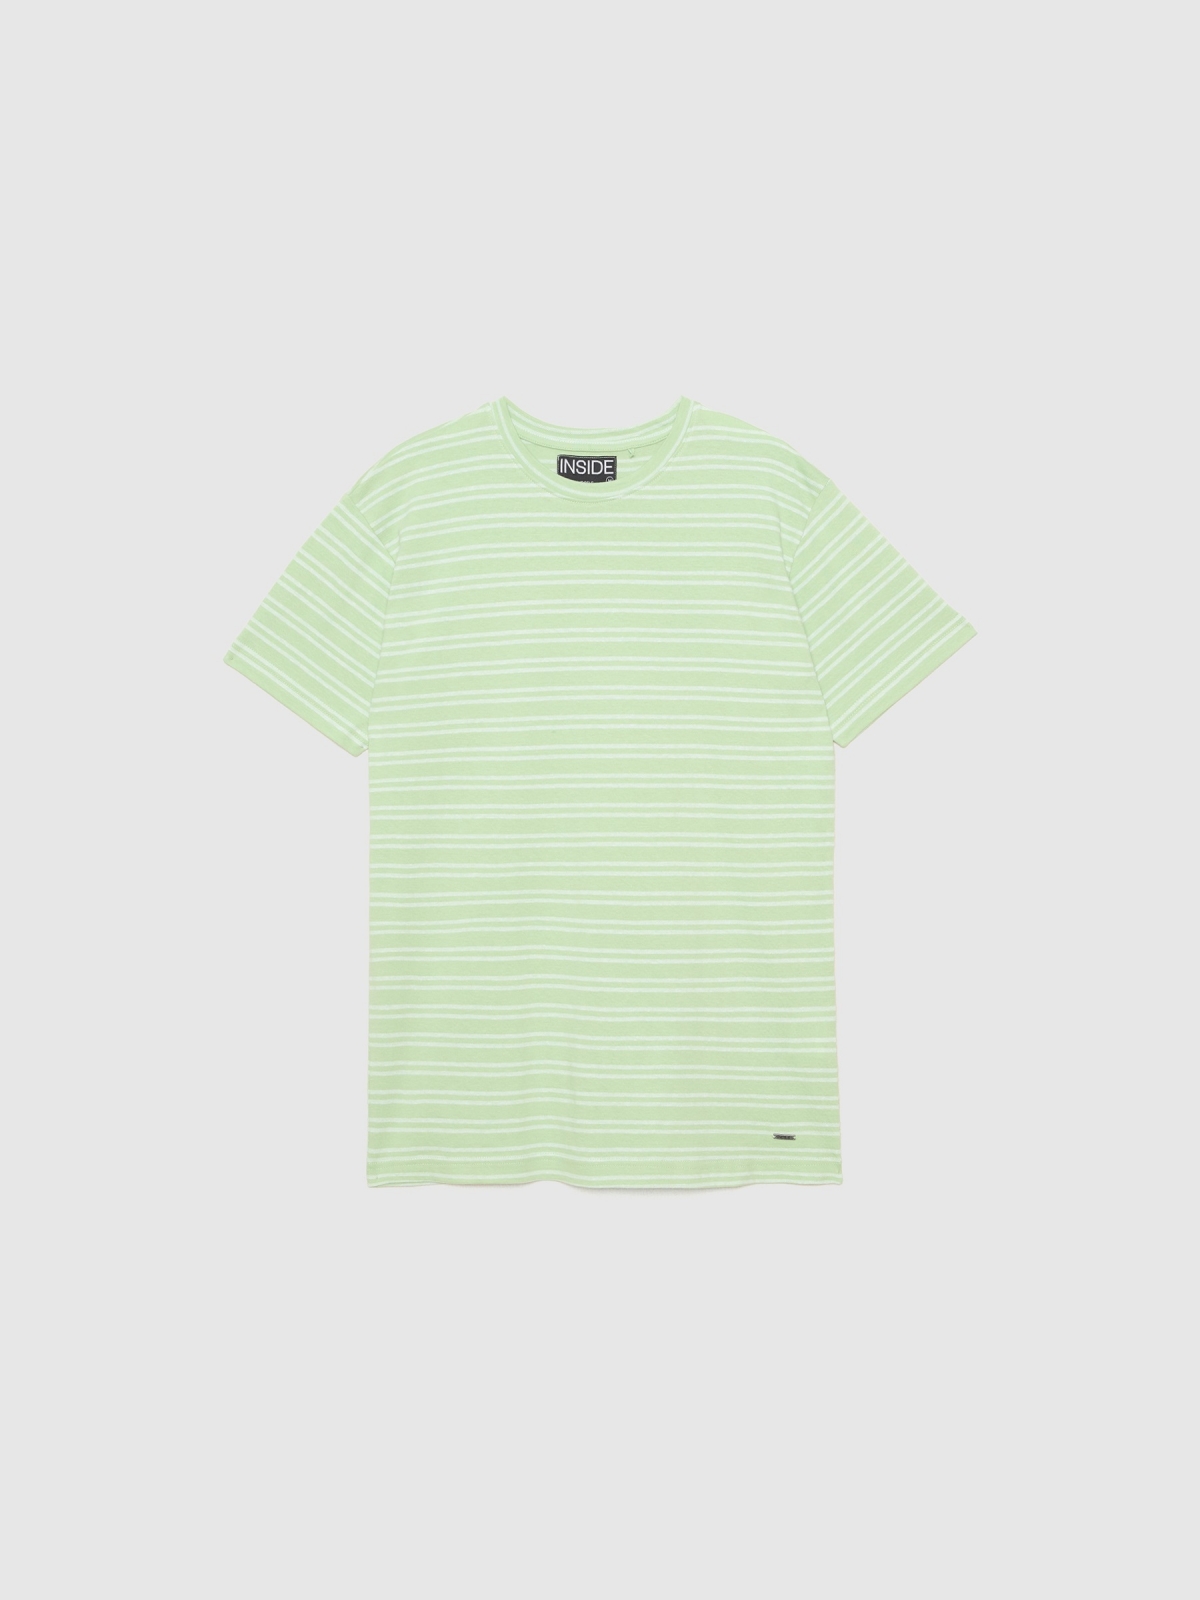  Textured striped T-shirt mint